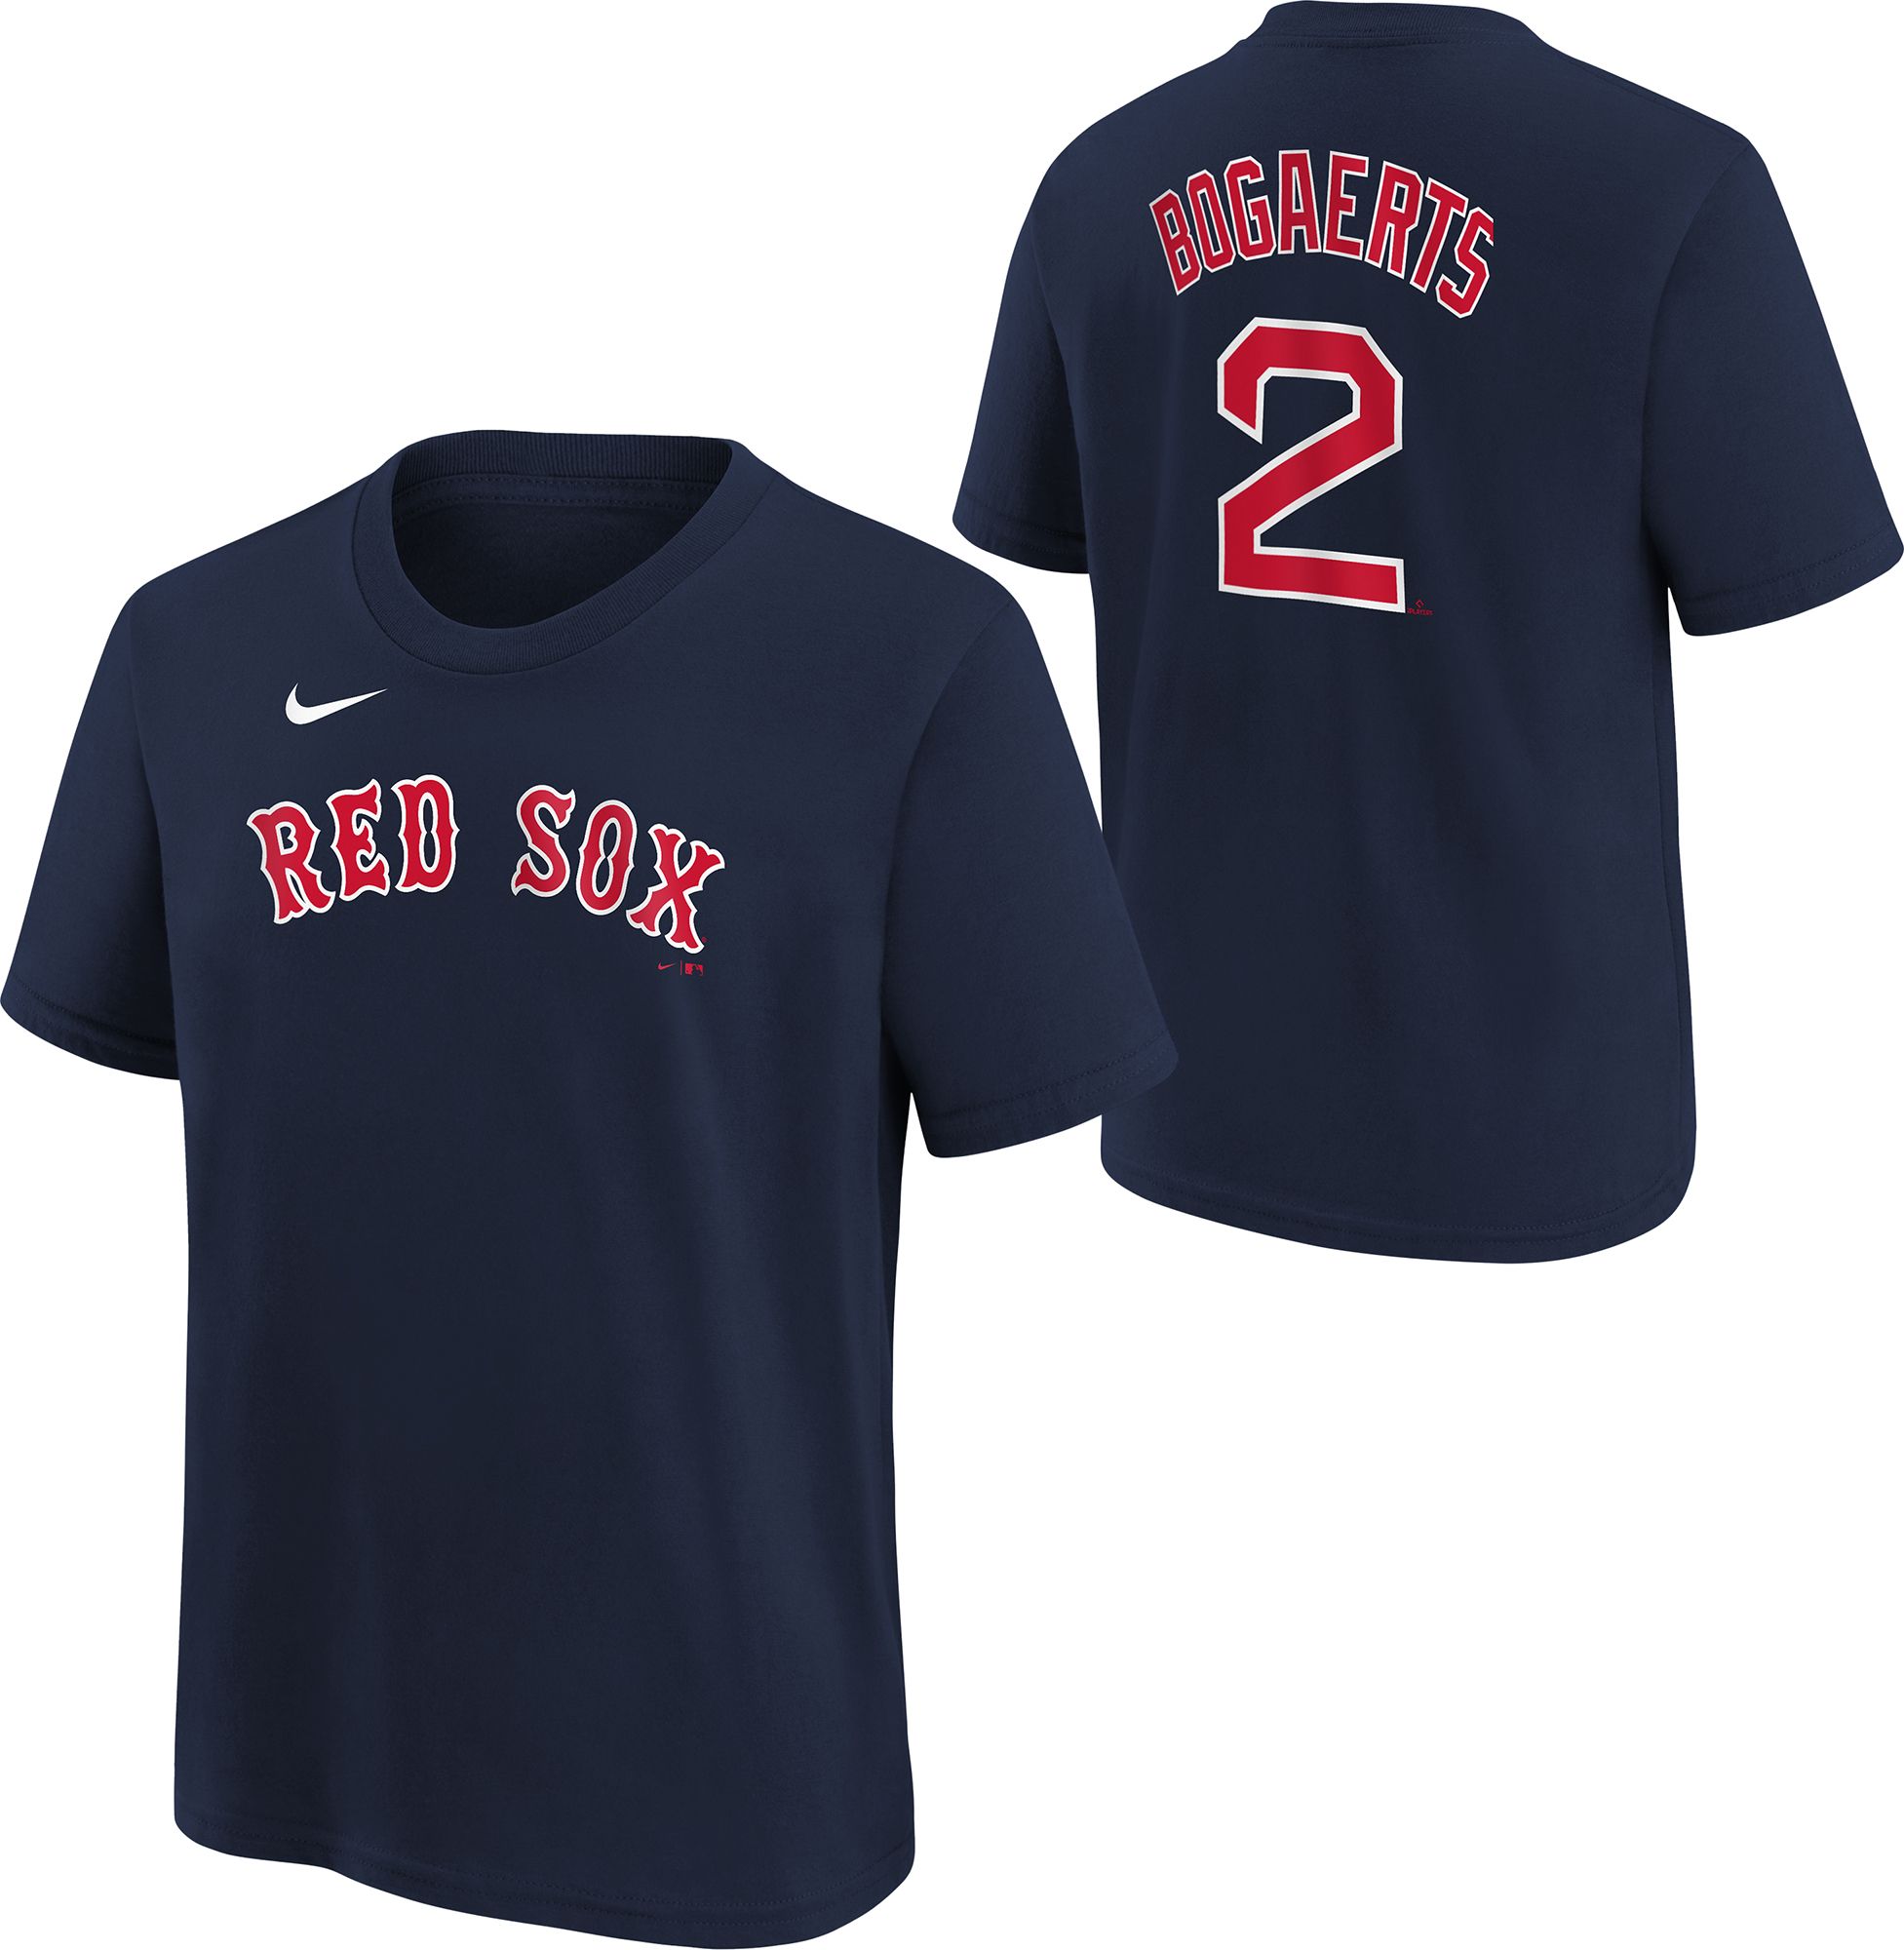 Nike / Outerstuff Little Kids' Boston Red Sox Xander Bogaerts #2